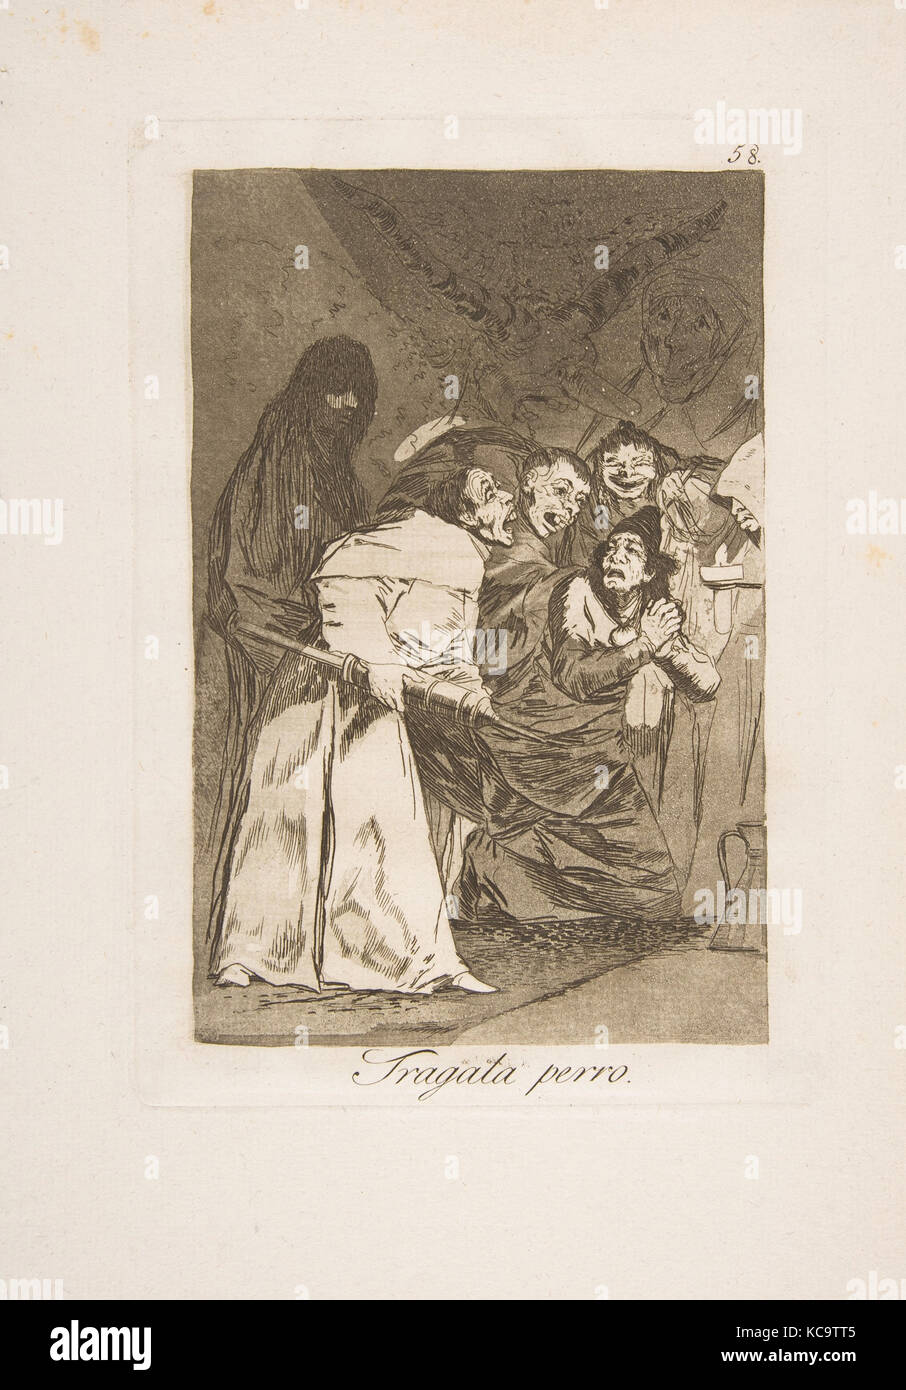 58 Plaque de "Los Caprichos" : l'avaler, le chien (Tragala perro.), Goya, 1799 Banque D'Images